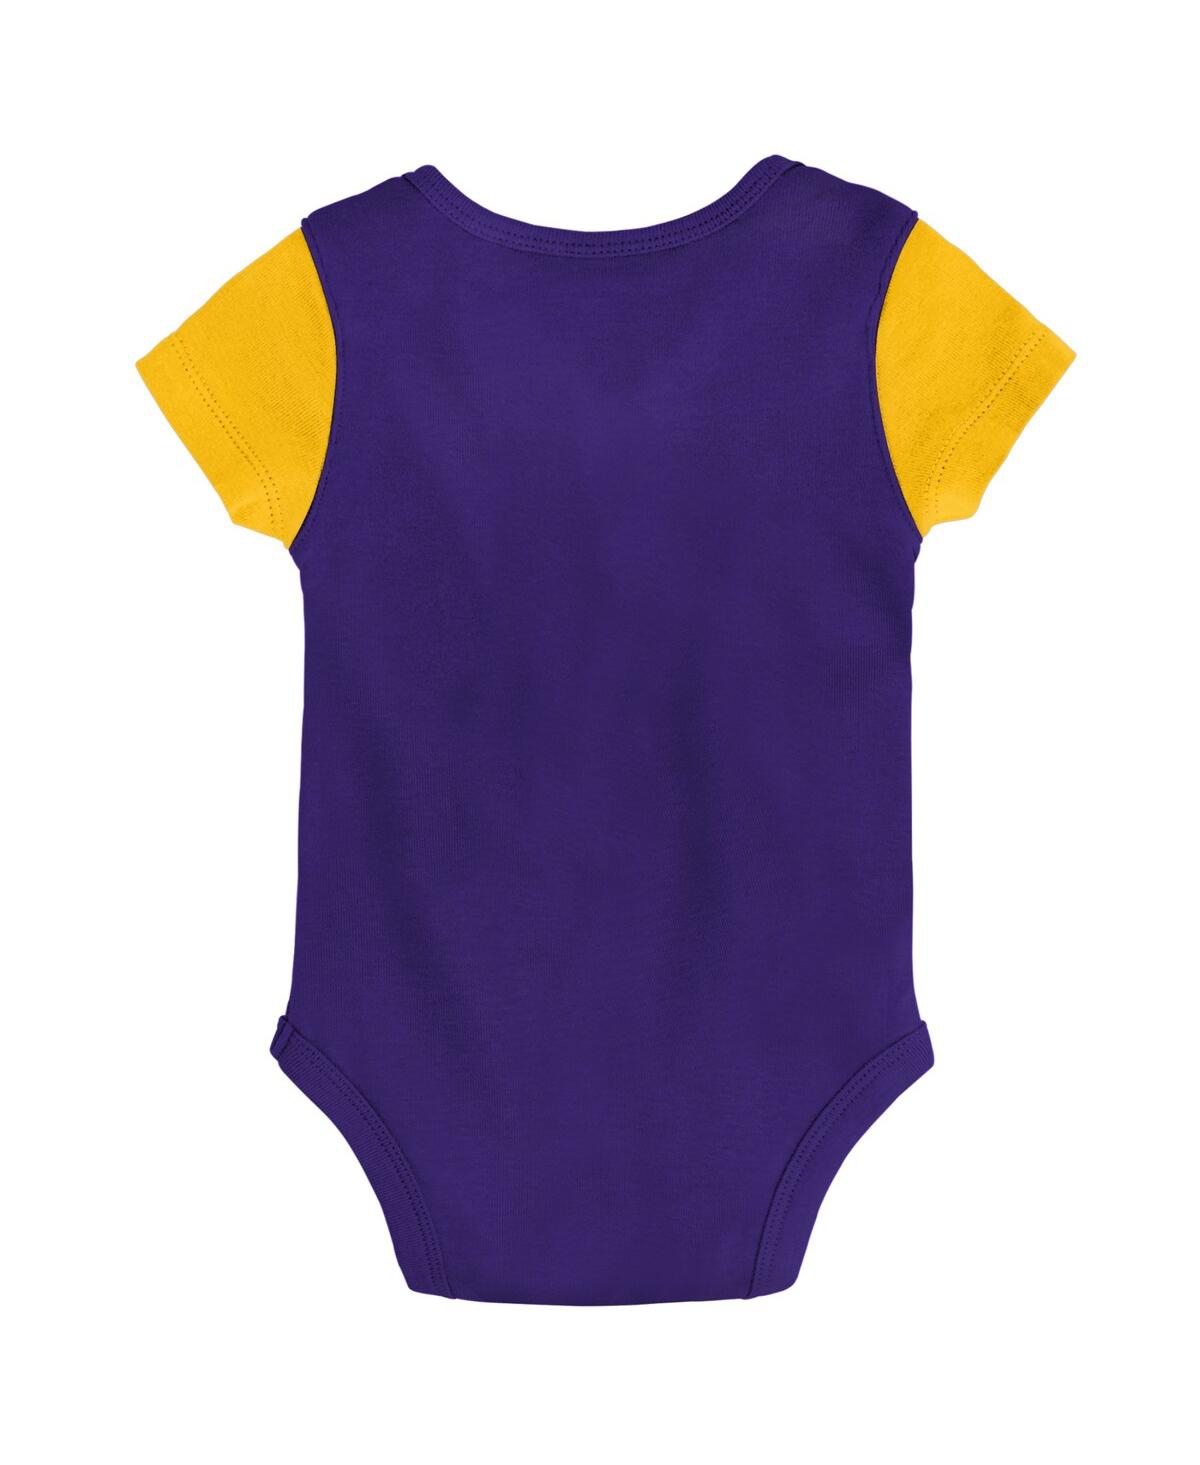 Shop Outerstuff Newborn And Infant Boys And Girls Purple, Gold Minnesota Vikings Little Champ Three-piece Bodysuit B